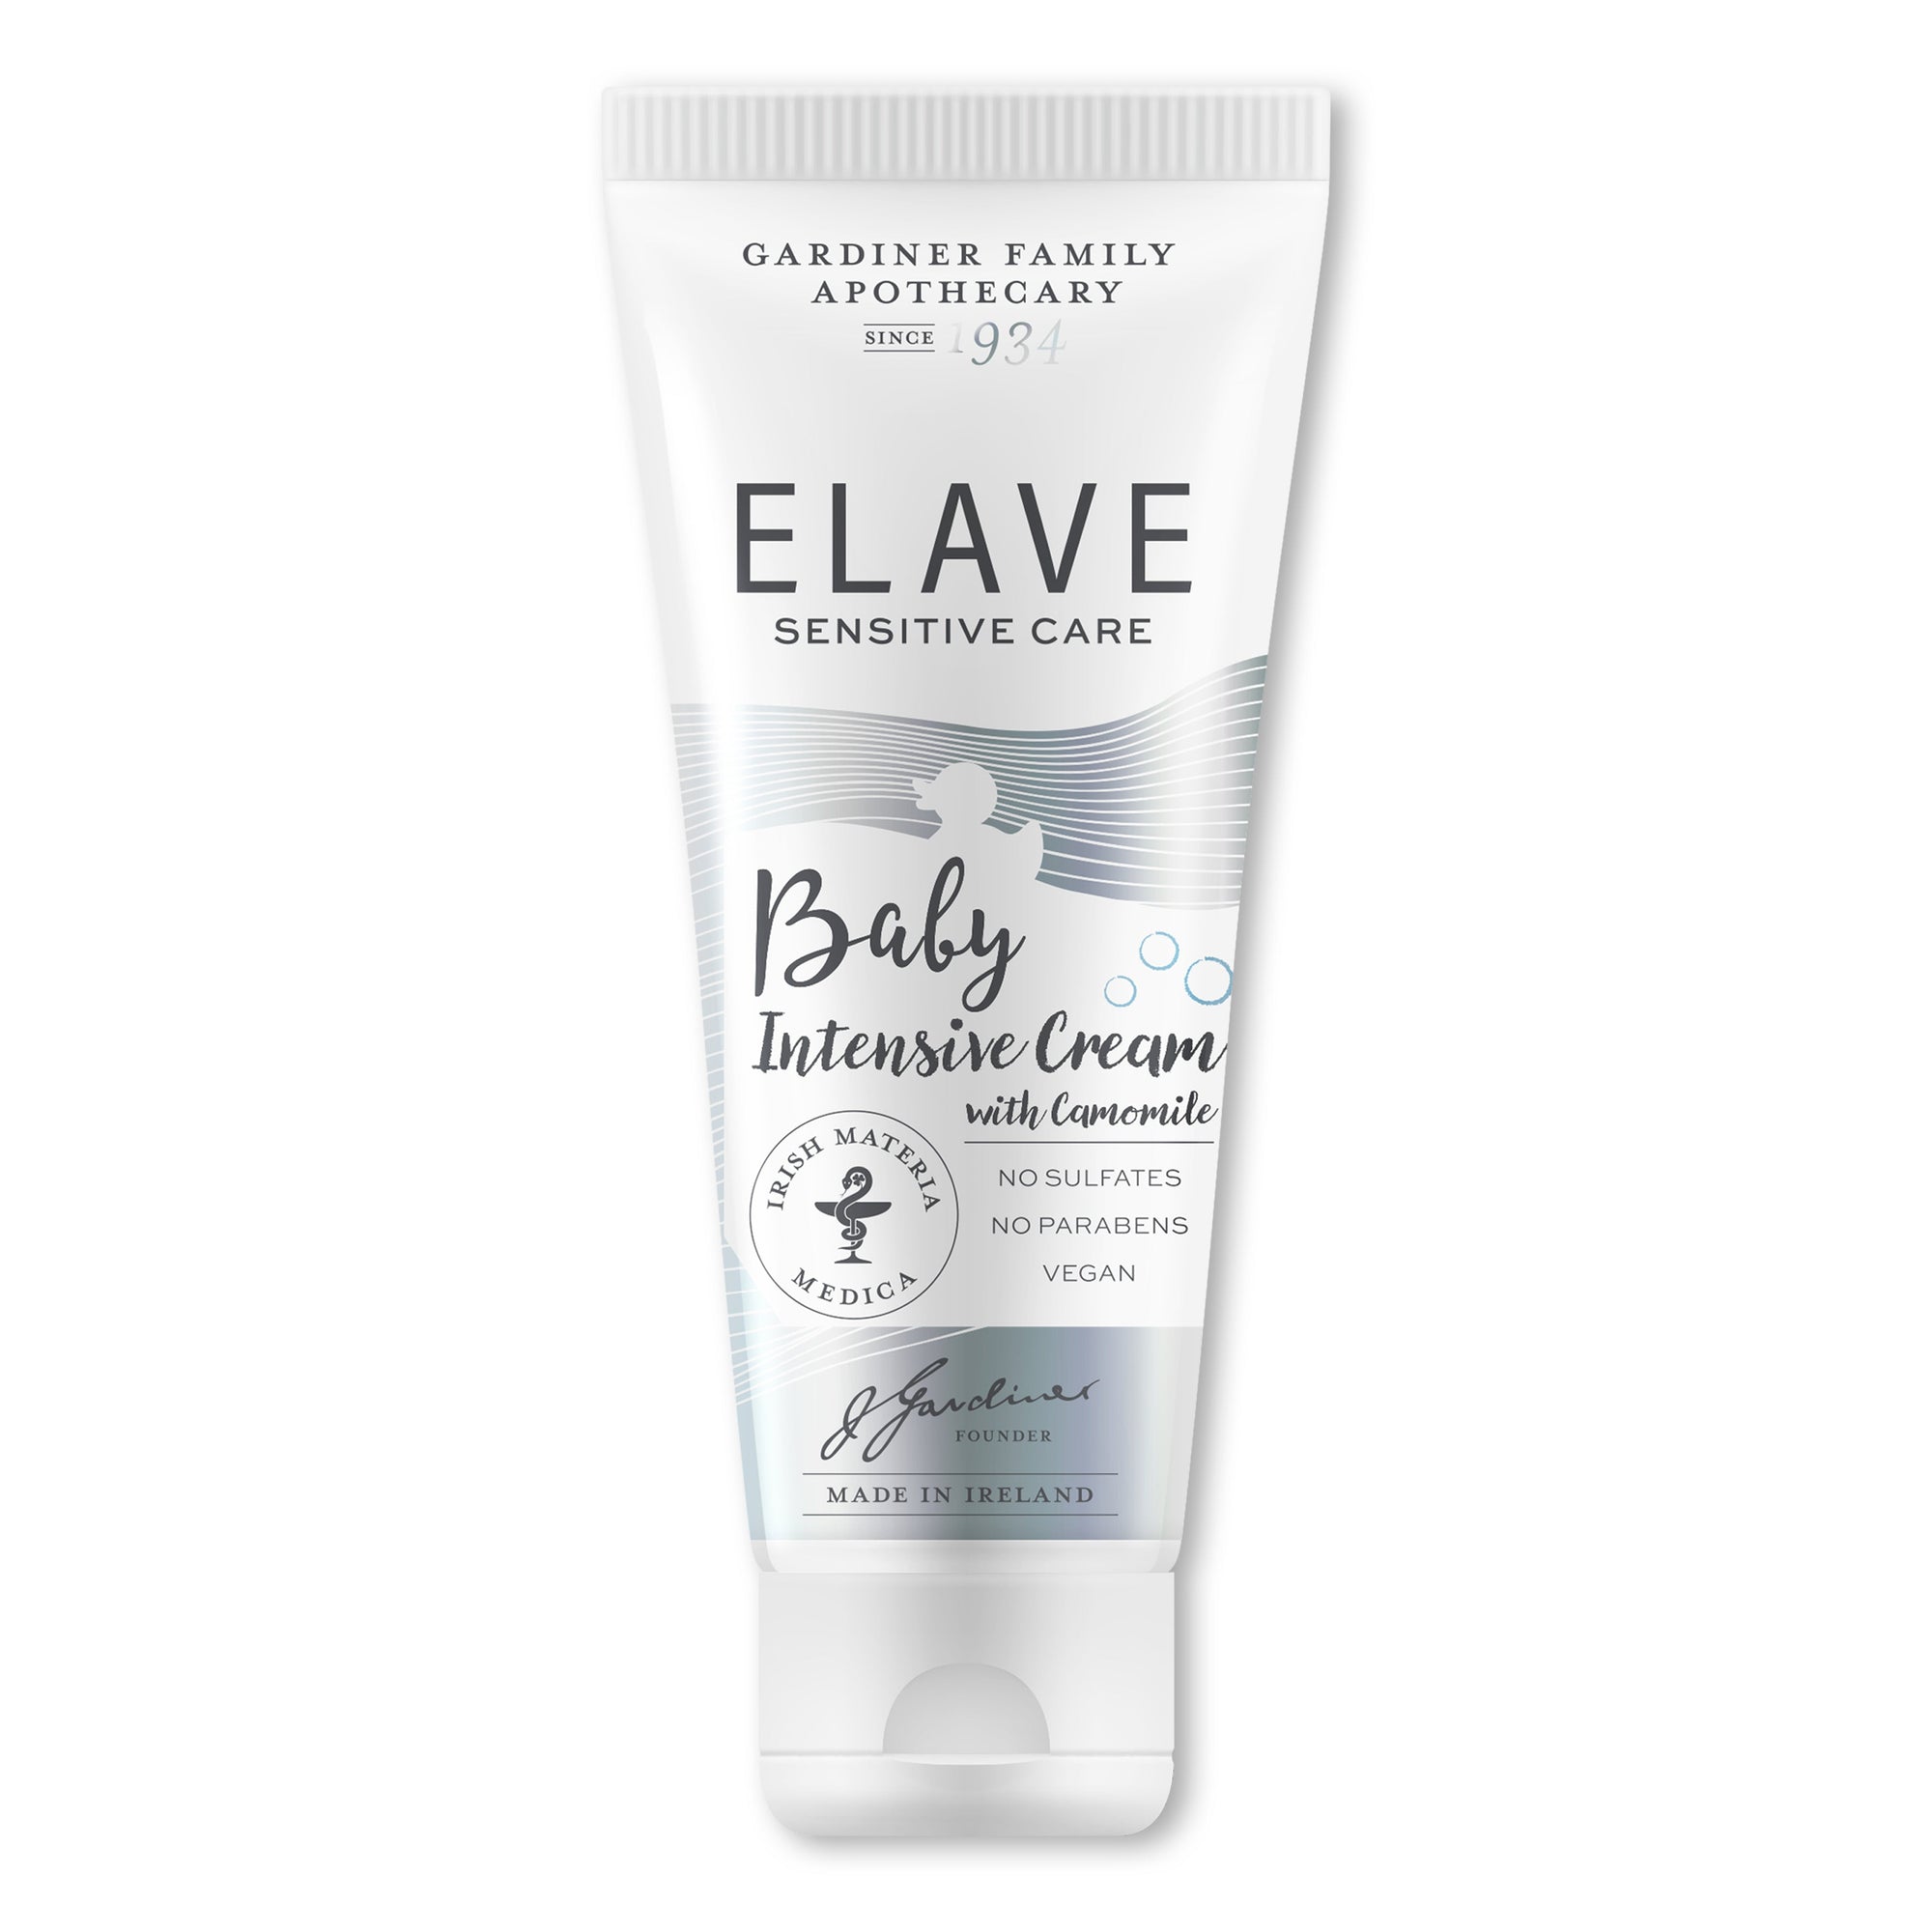 Elave 嬰兒深度修護潤膚霜 125毫升 / Elave Baby Intensive Cream 125ml